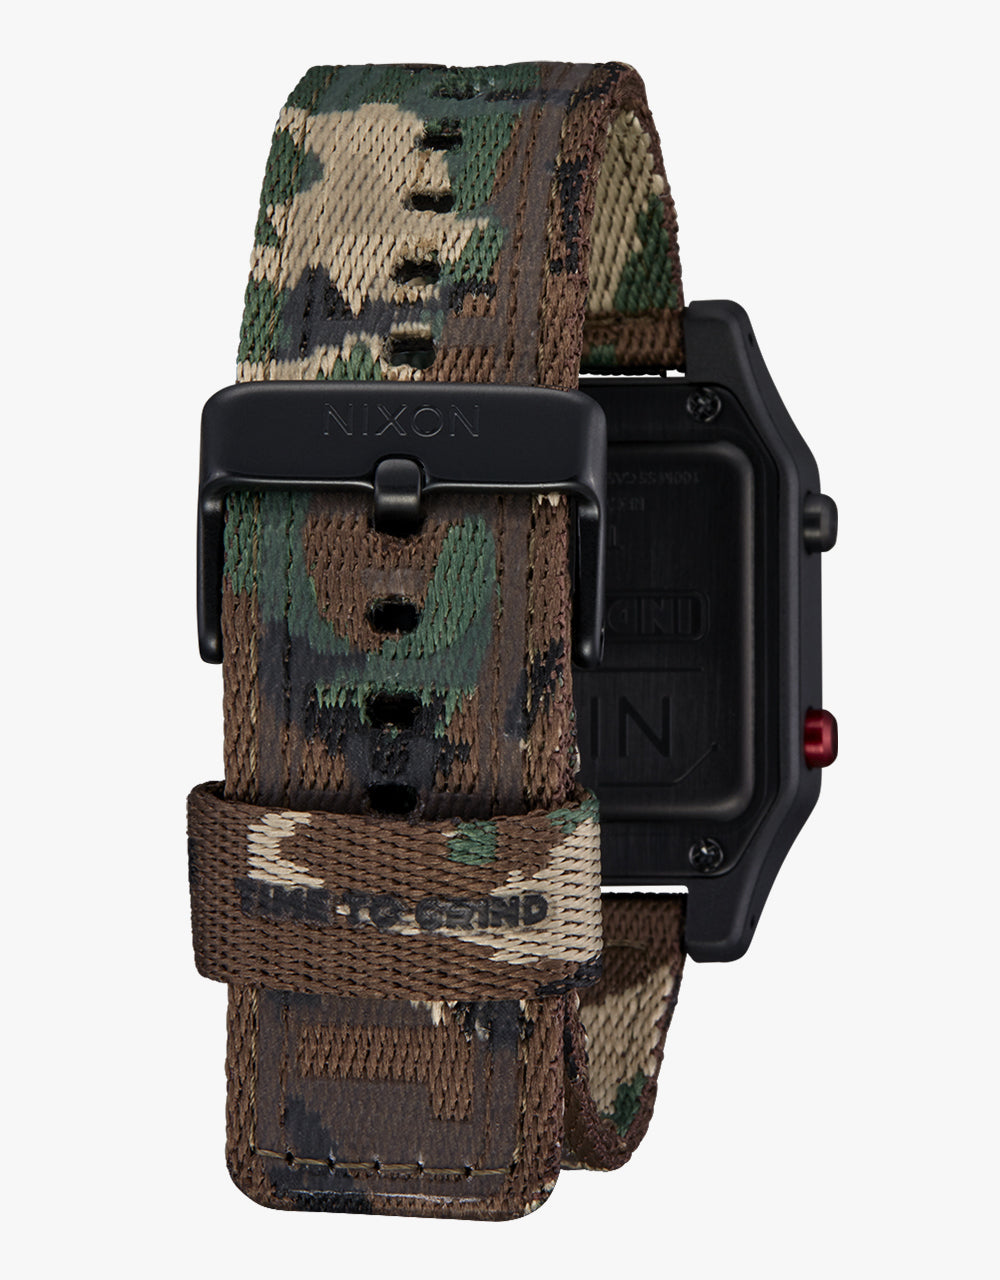 Nixon x Independent Staple Watch - Black/Camo